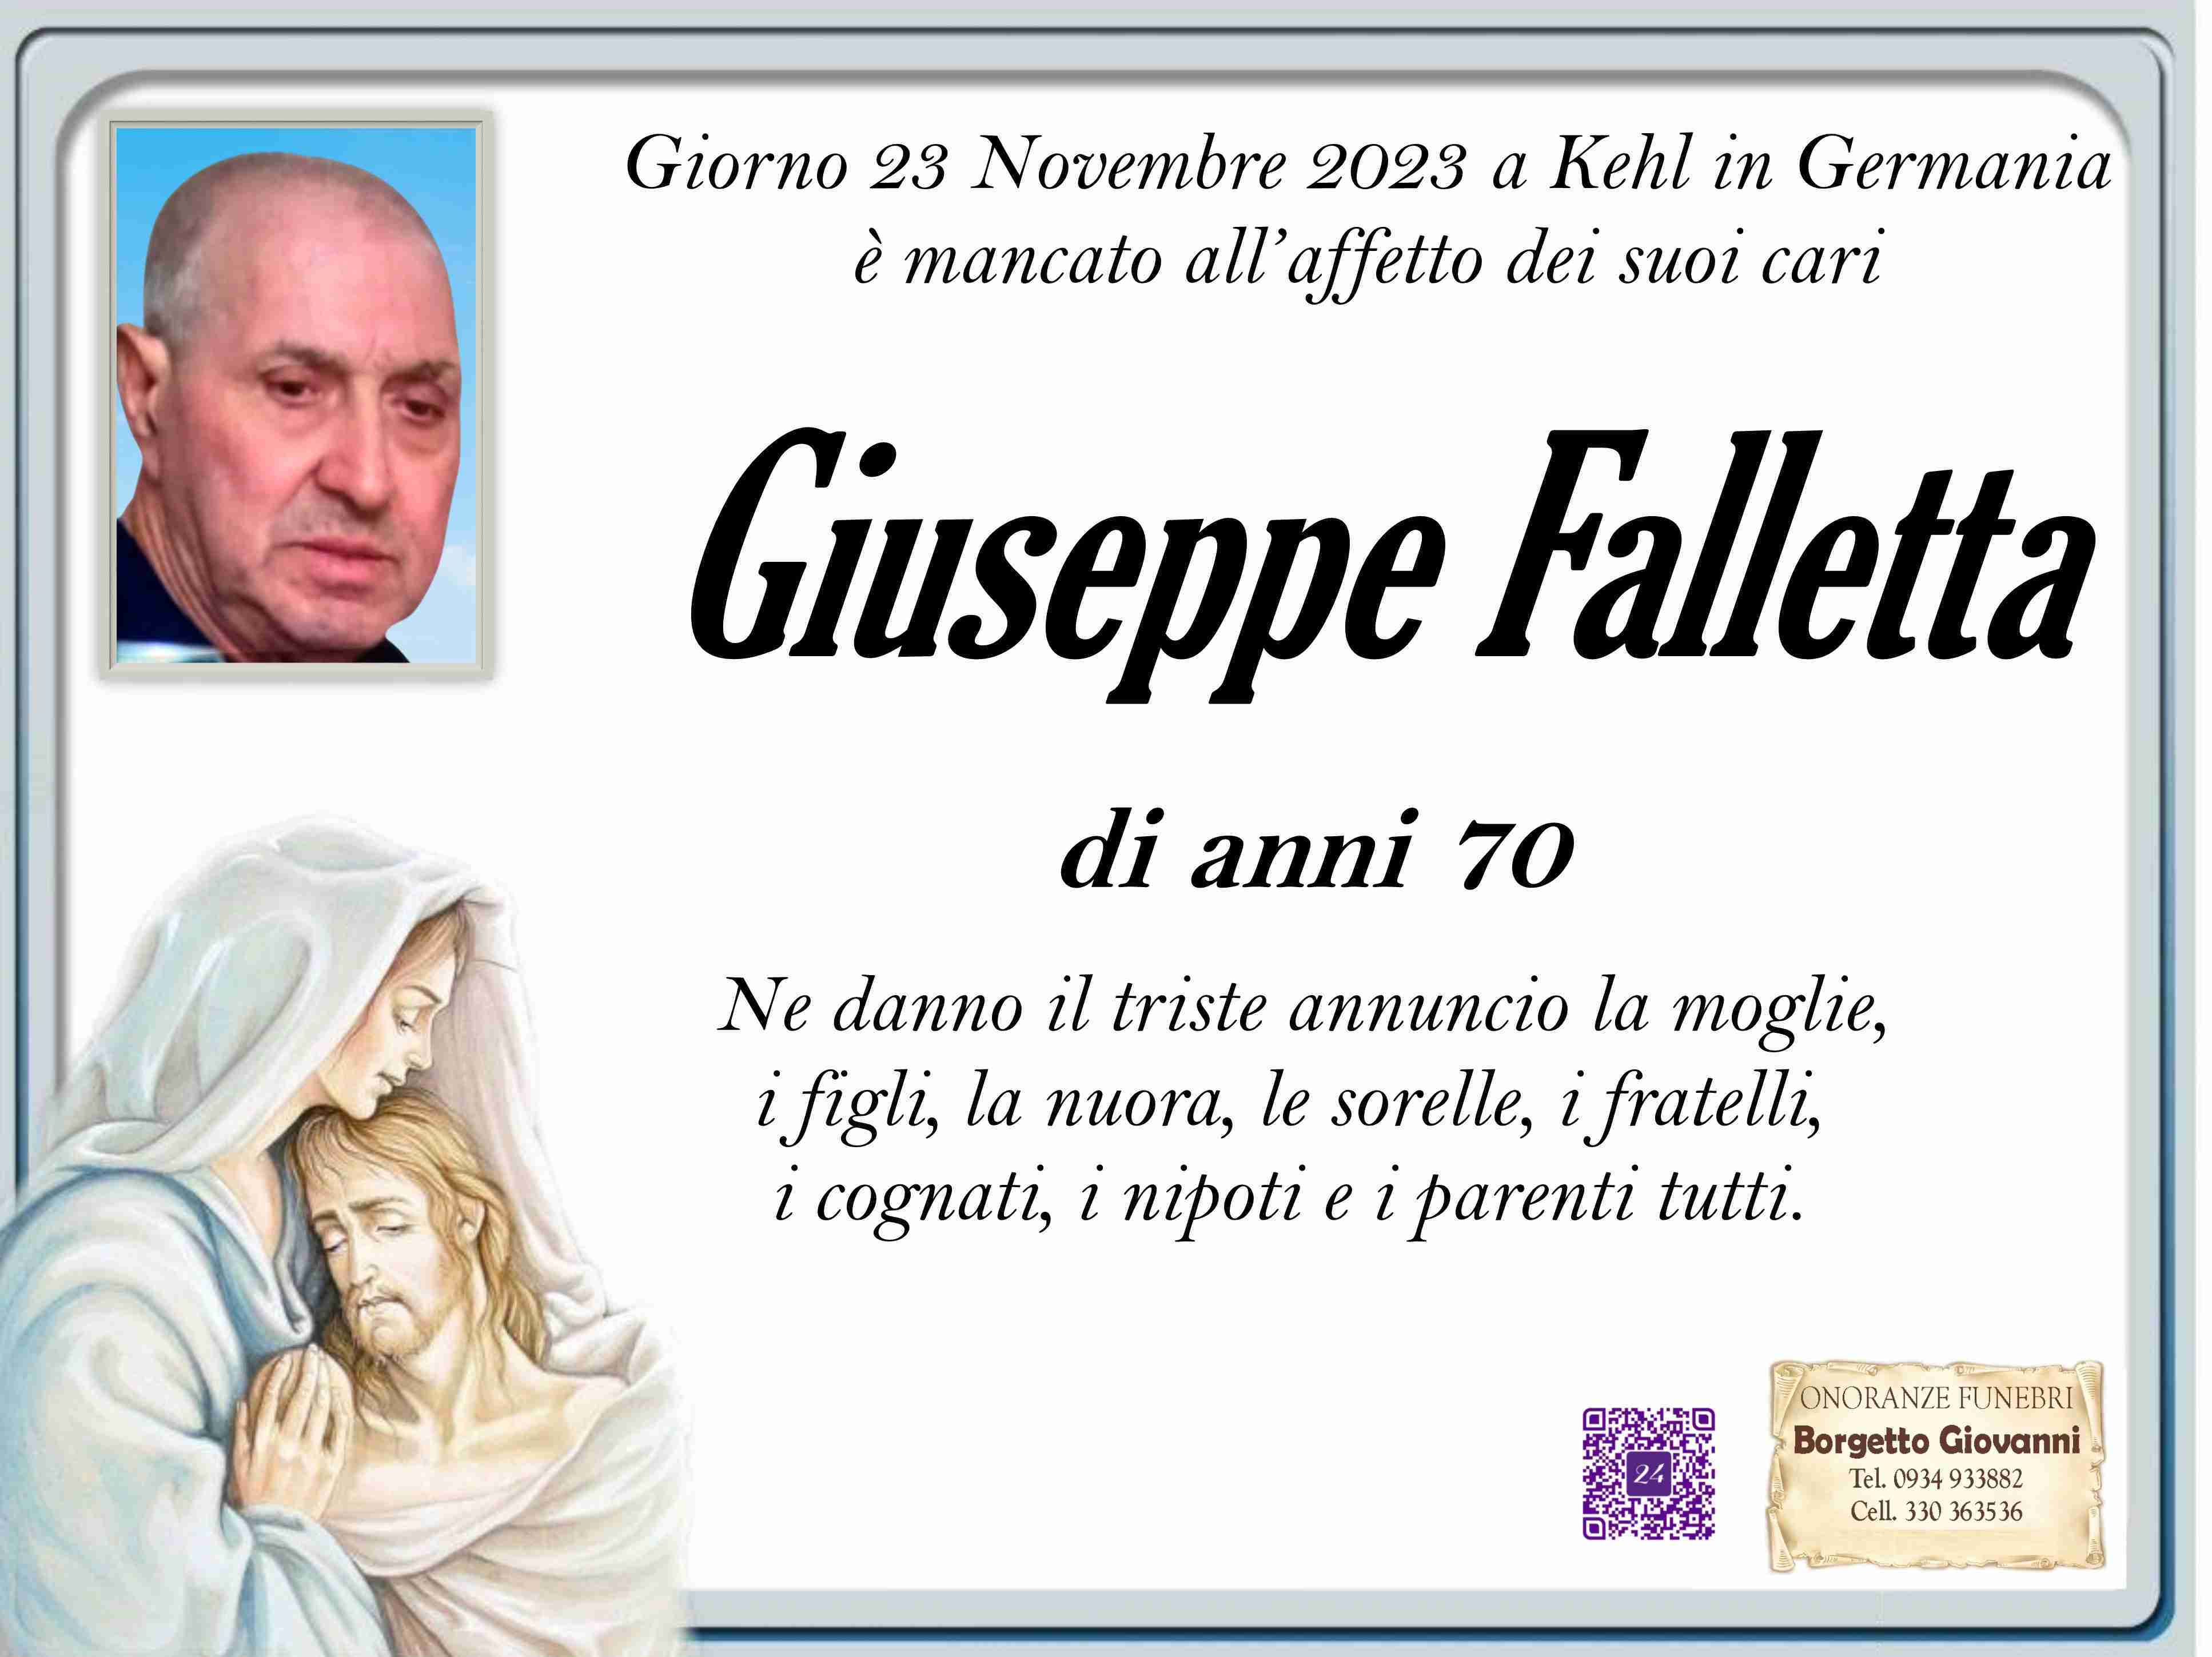 Giuseppe Falletta